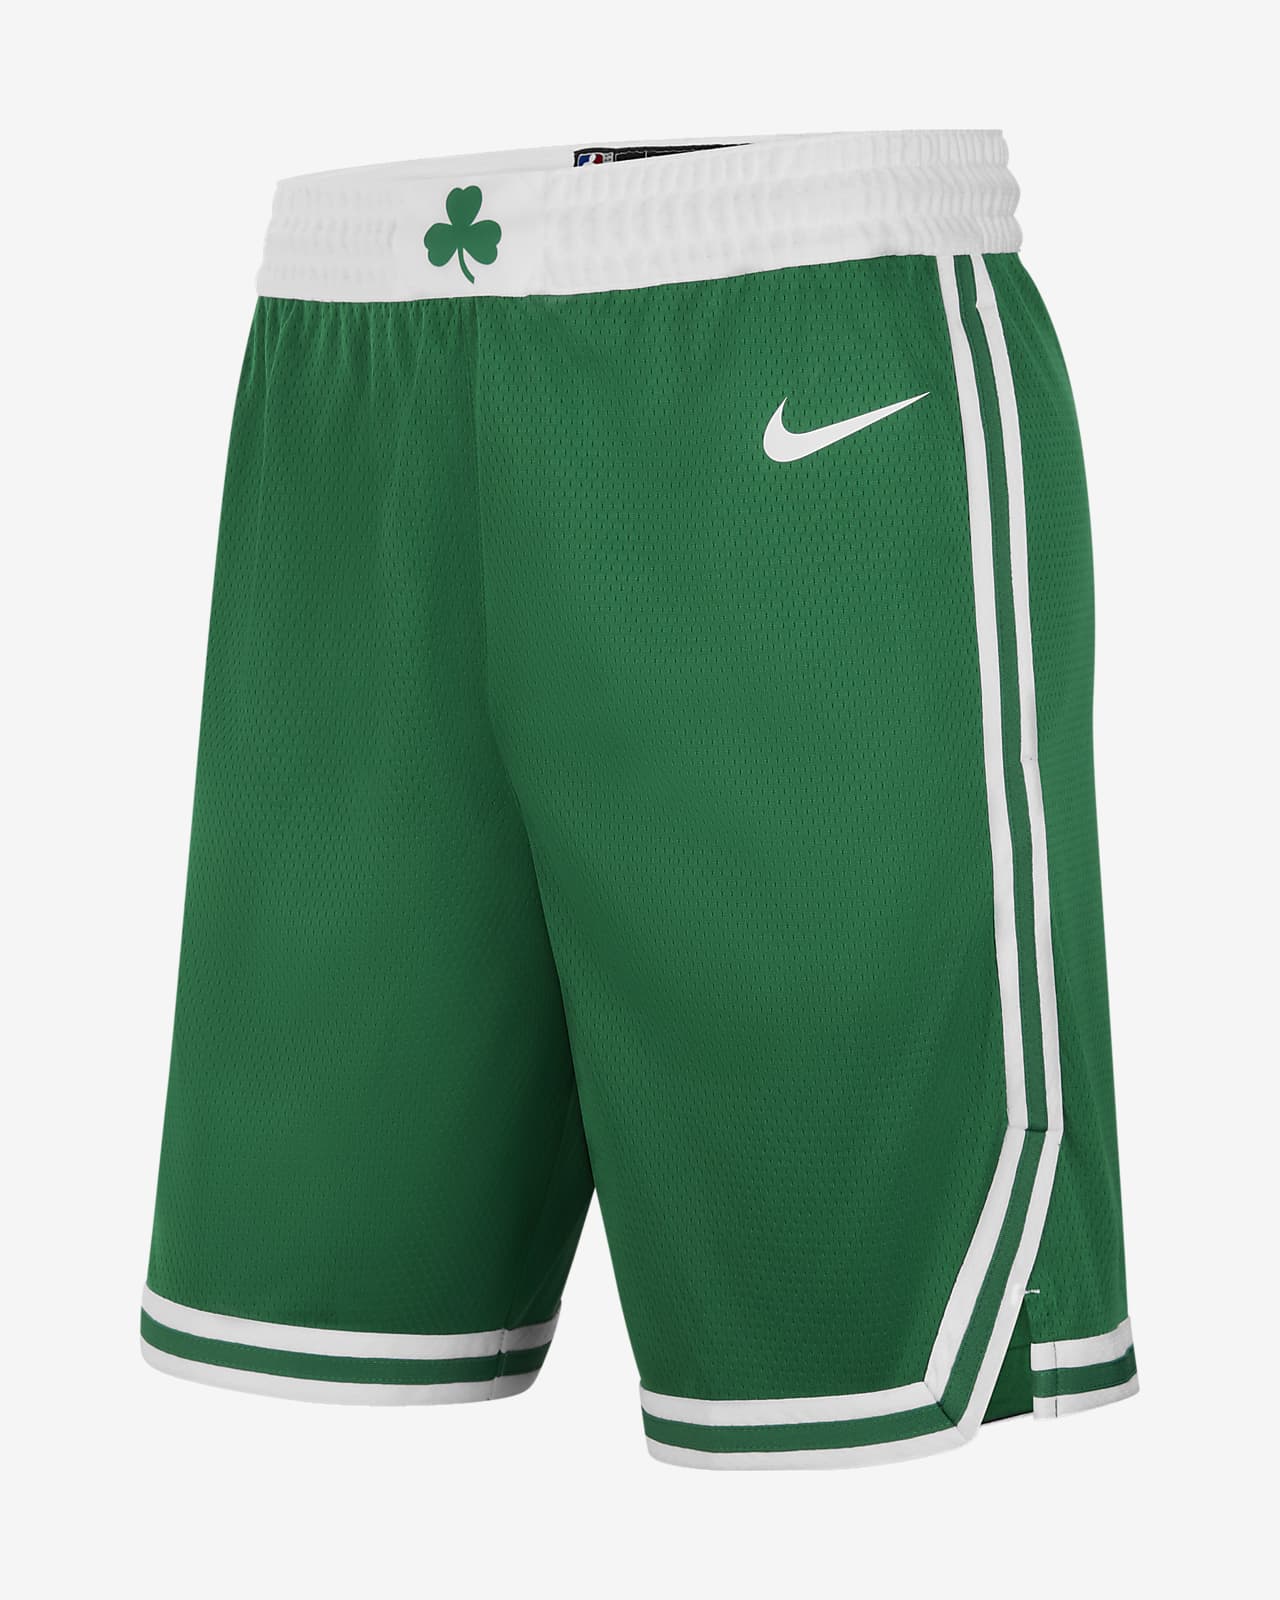 celtics green shorts